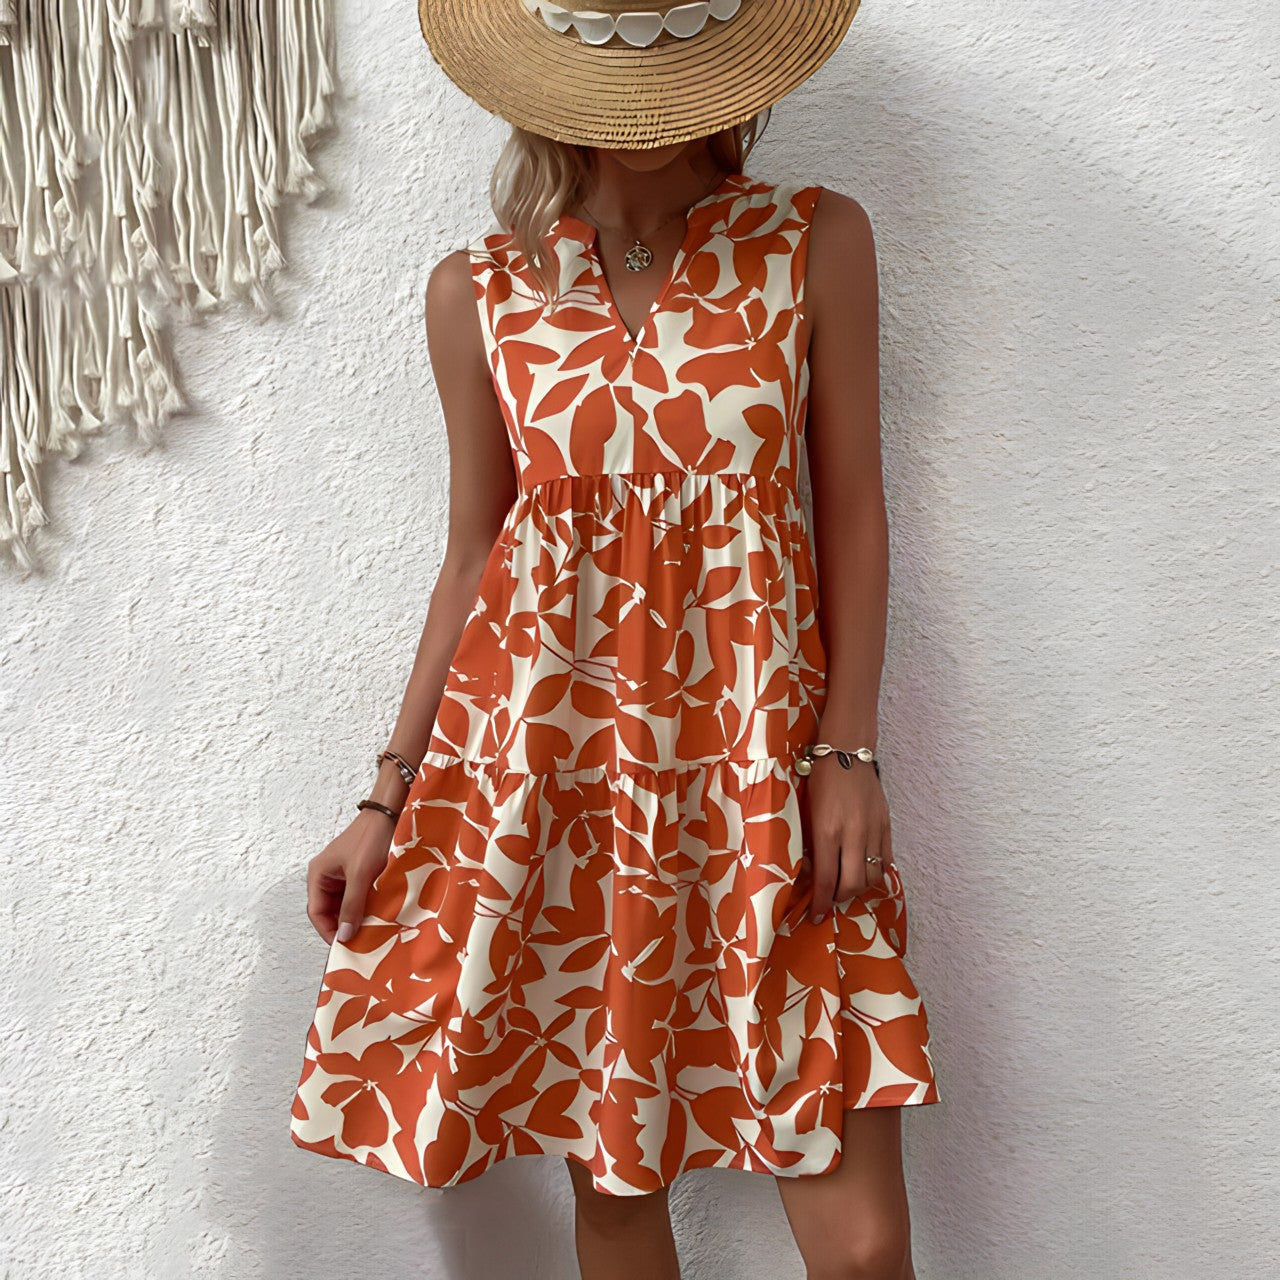 Liliane - Casual boho summer dress